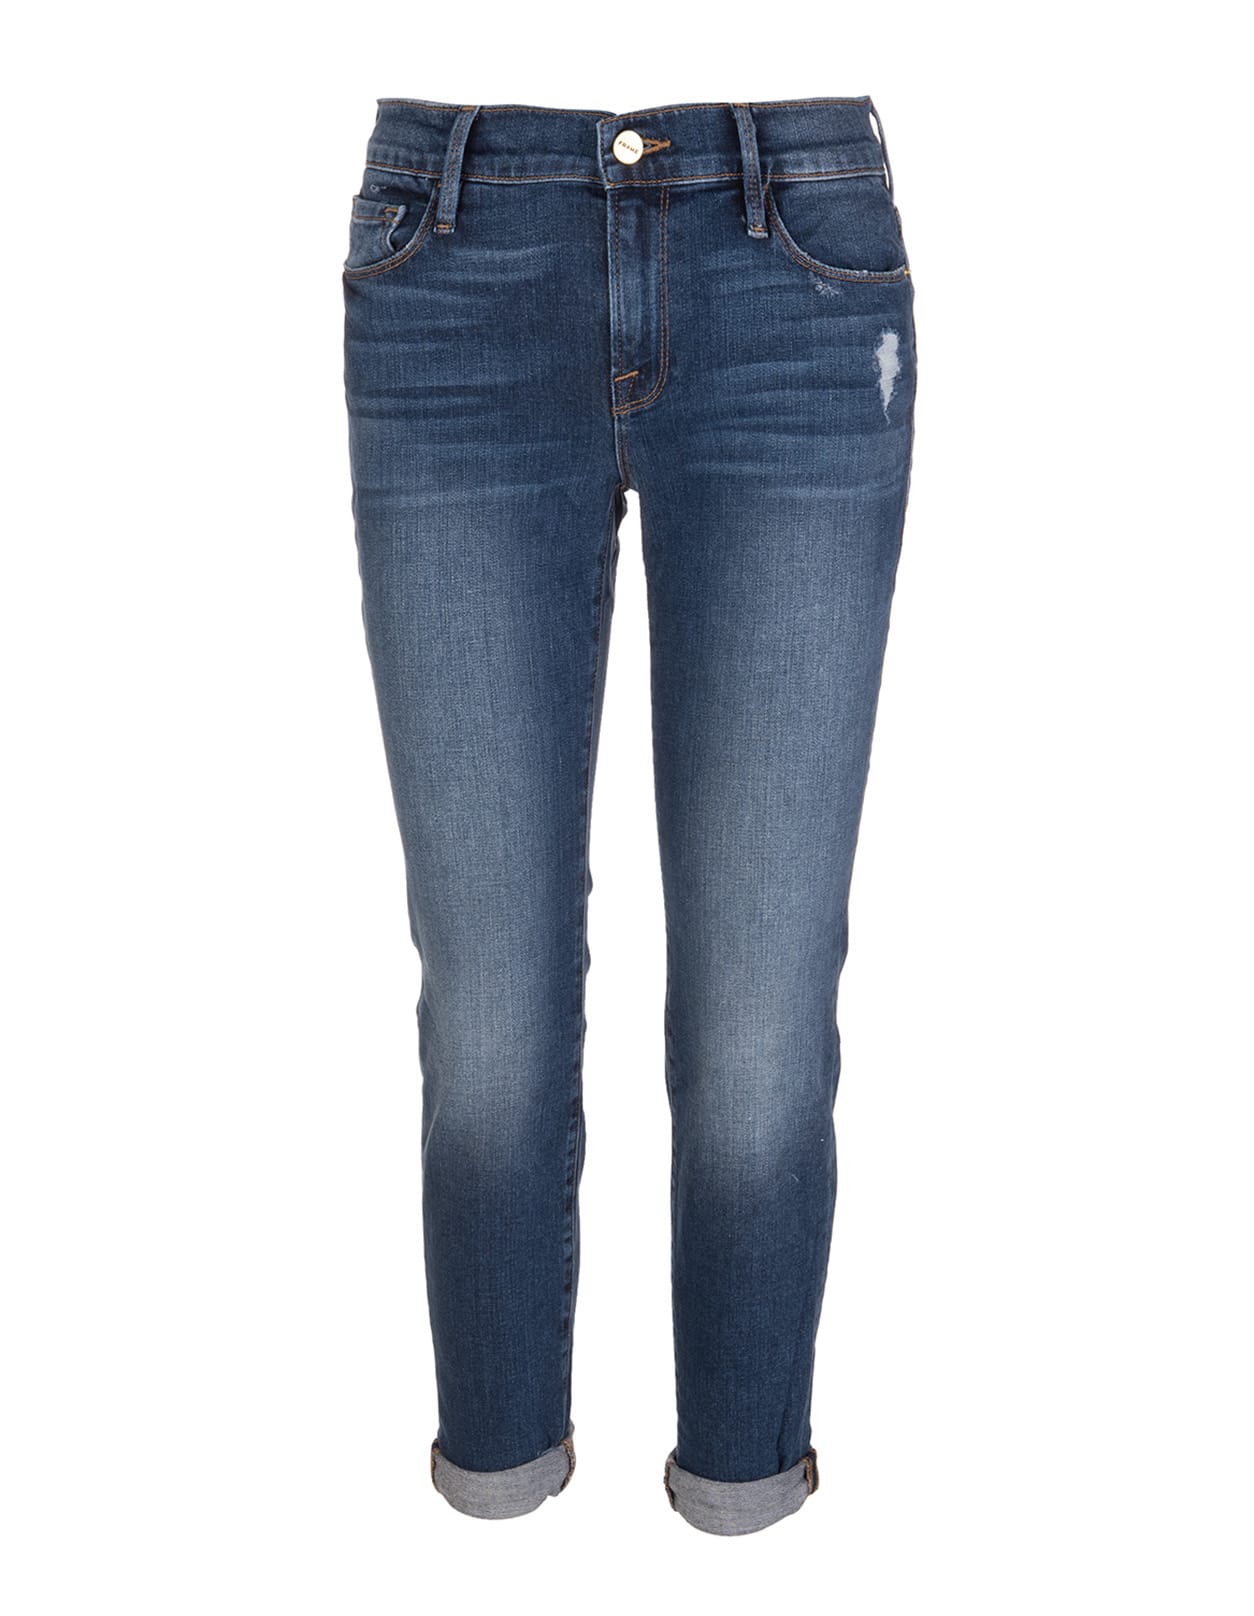 Frame Woman Le Garcon Azure Jeans